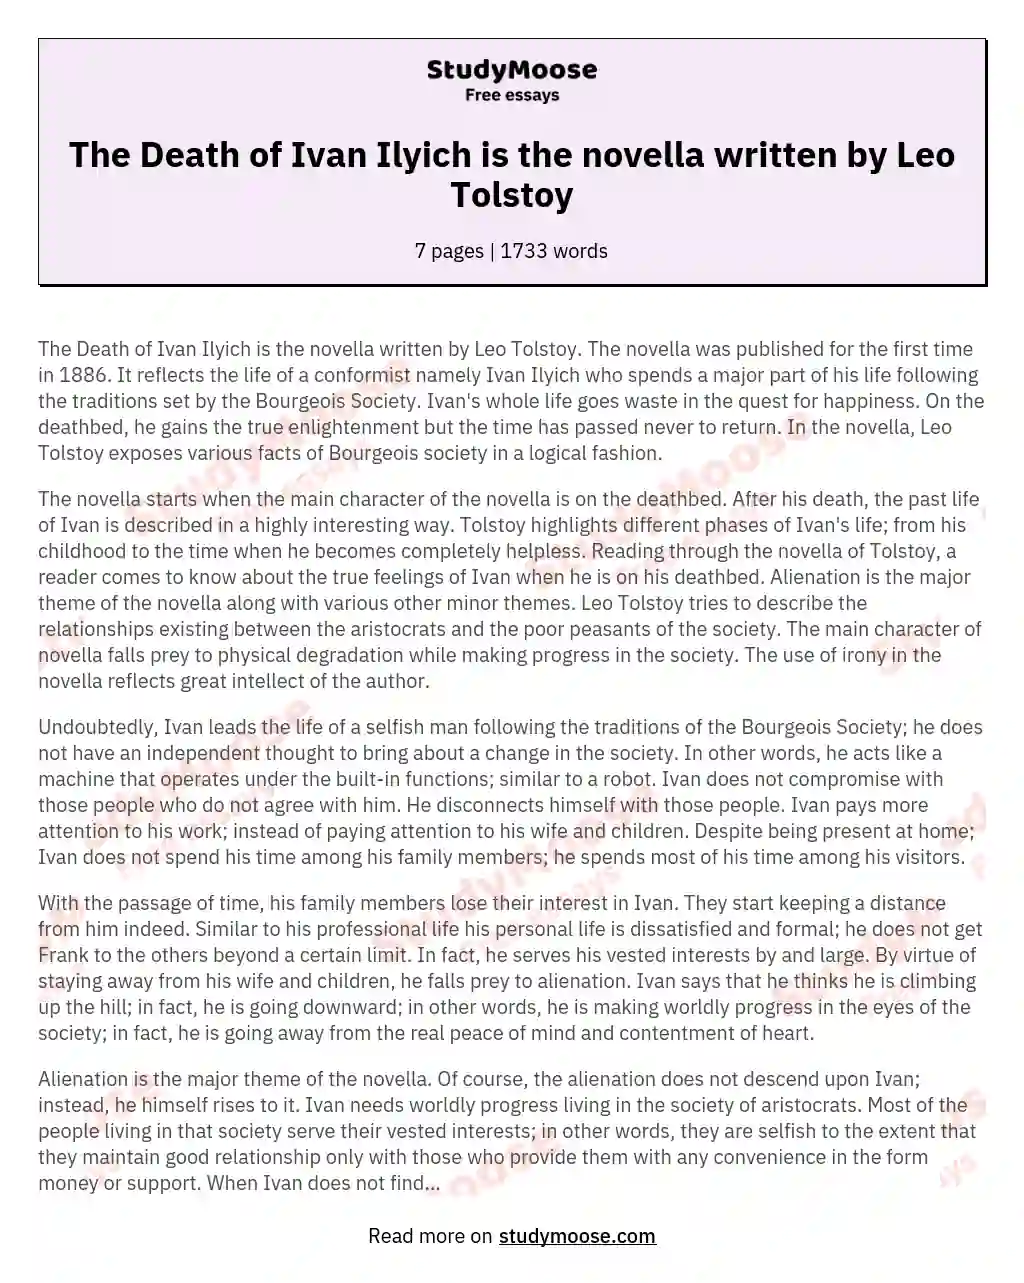 The Death of Ivan Ilyich is the novella written by Leo Tolstoy